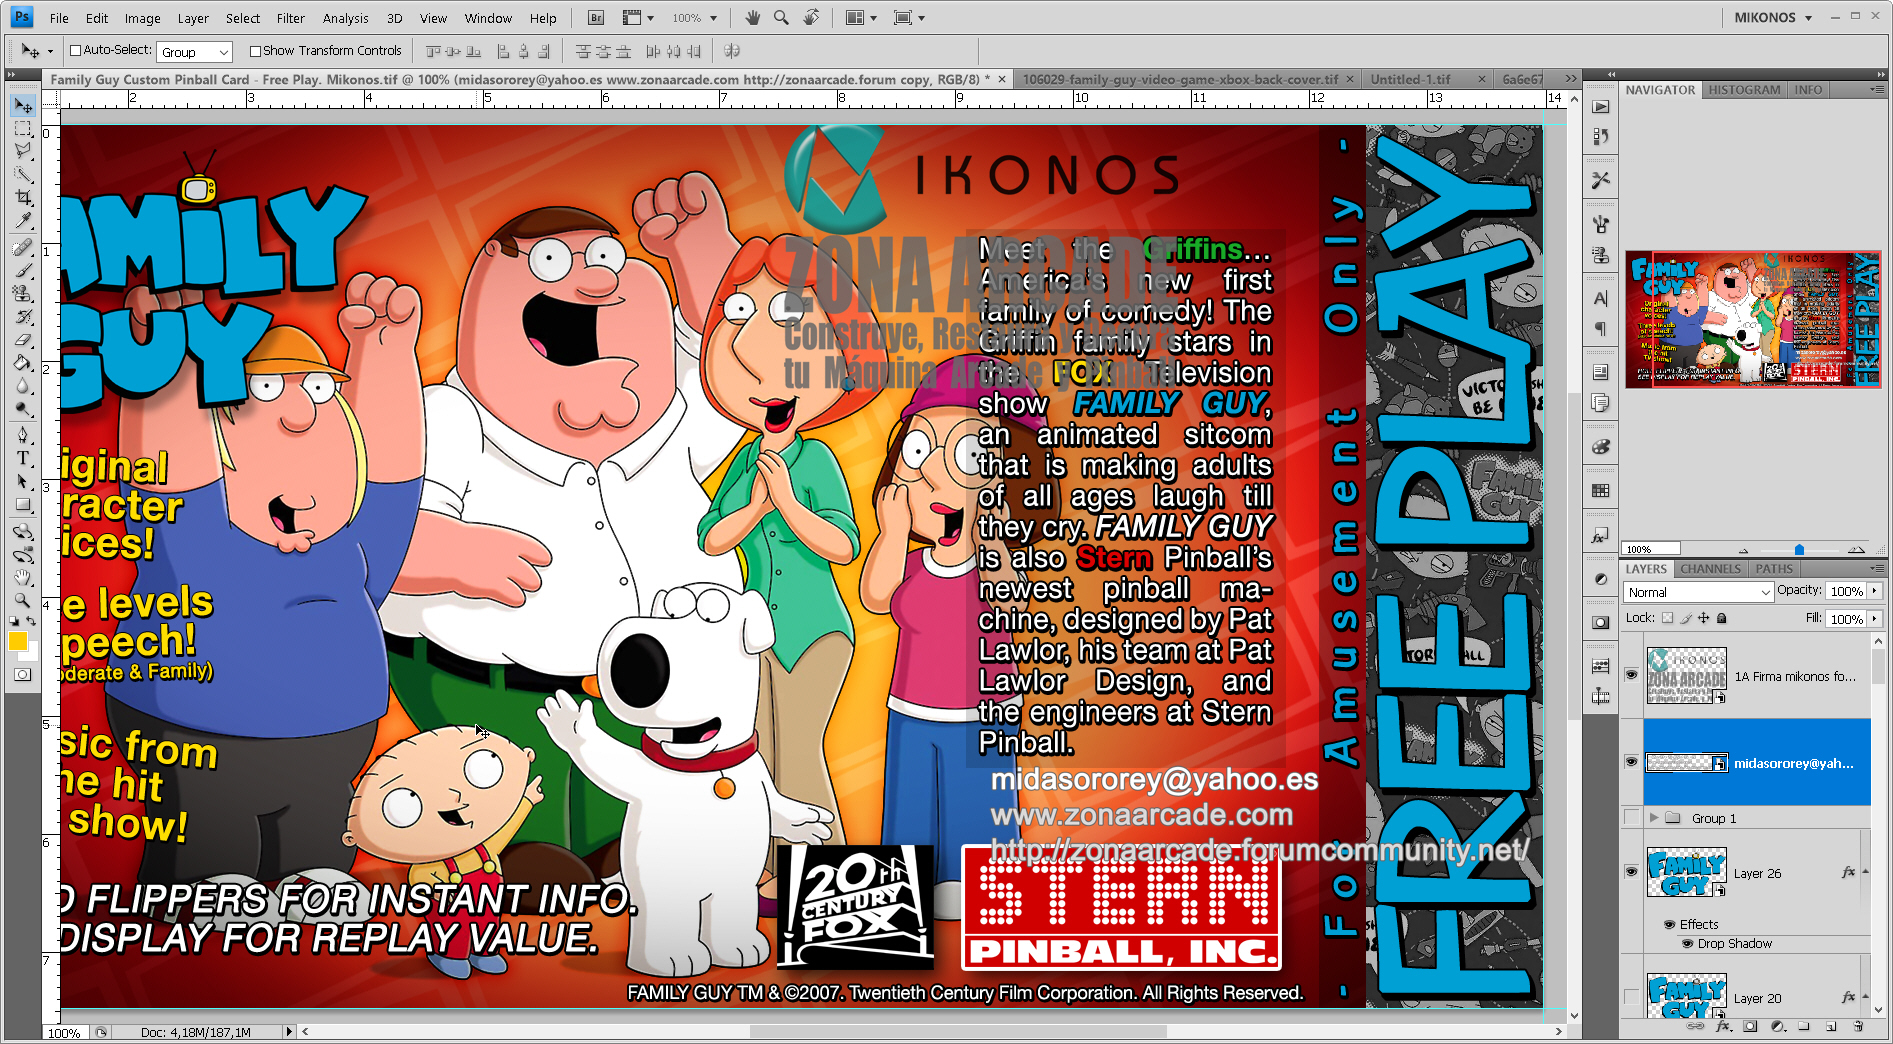 Family Guy Pinball Card Customized - Free Play. Mikonos1